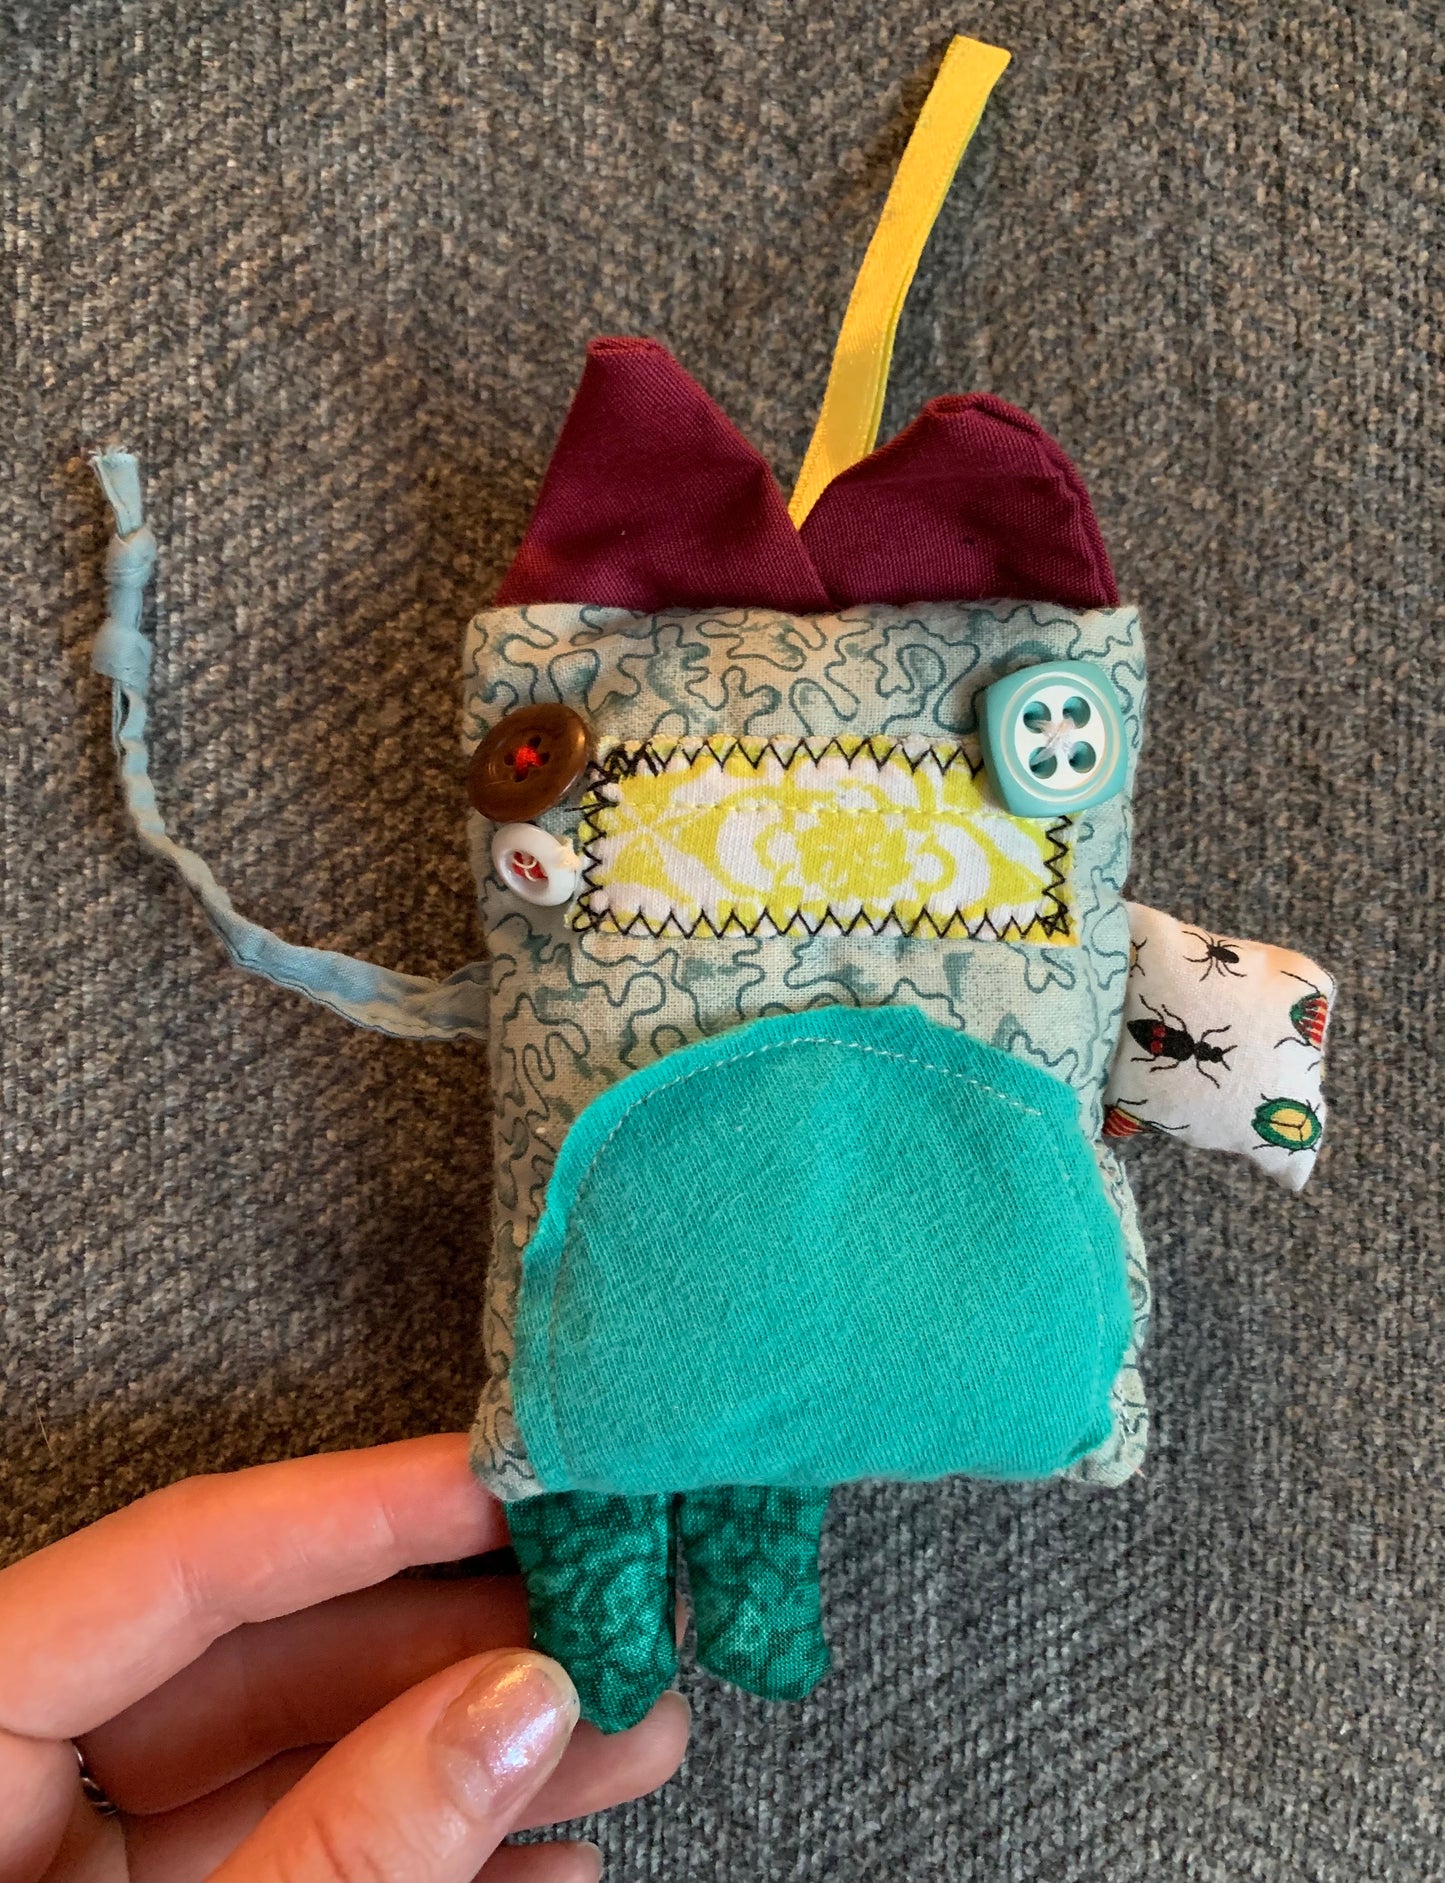 Mini Animal Friend - Monster - Keychain, Ornament, Backpack Charm